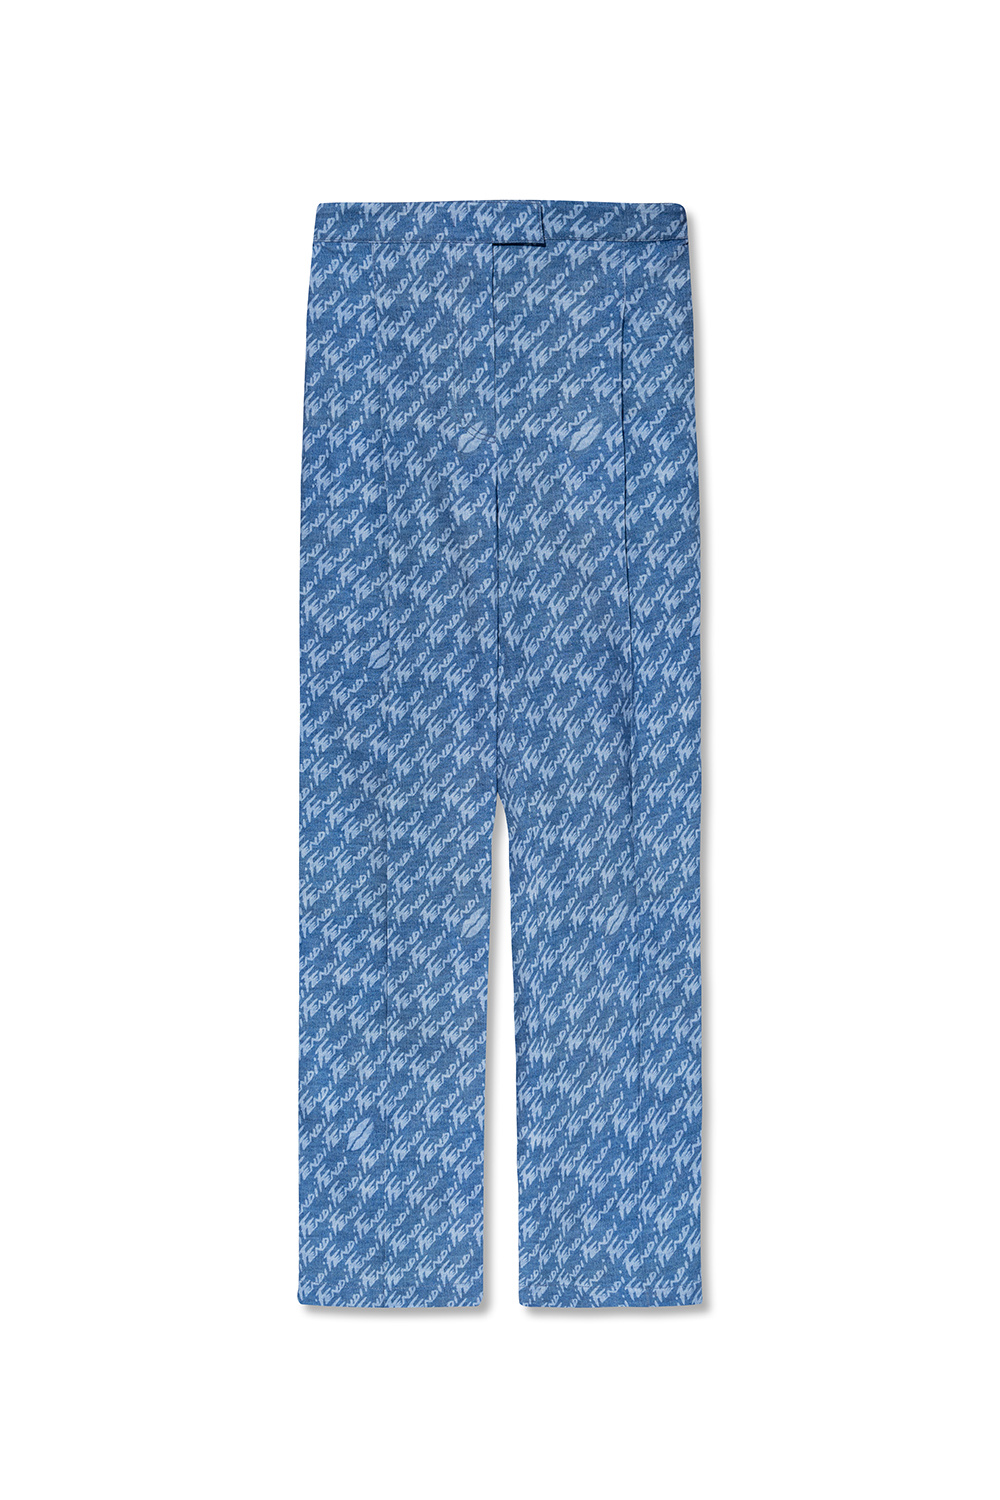 Fendi Trousers with Fendi Brush pattern, jeans mom a vita alta  elasticizzati, IetpShops